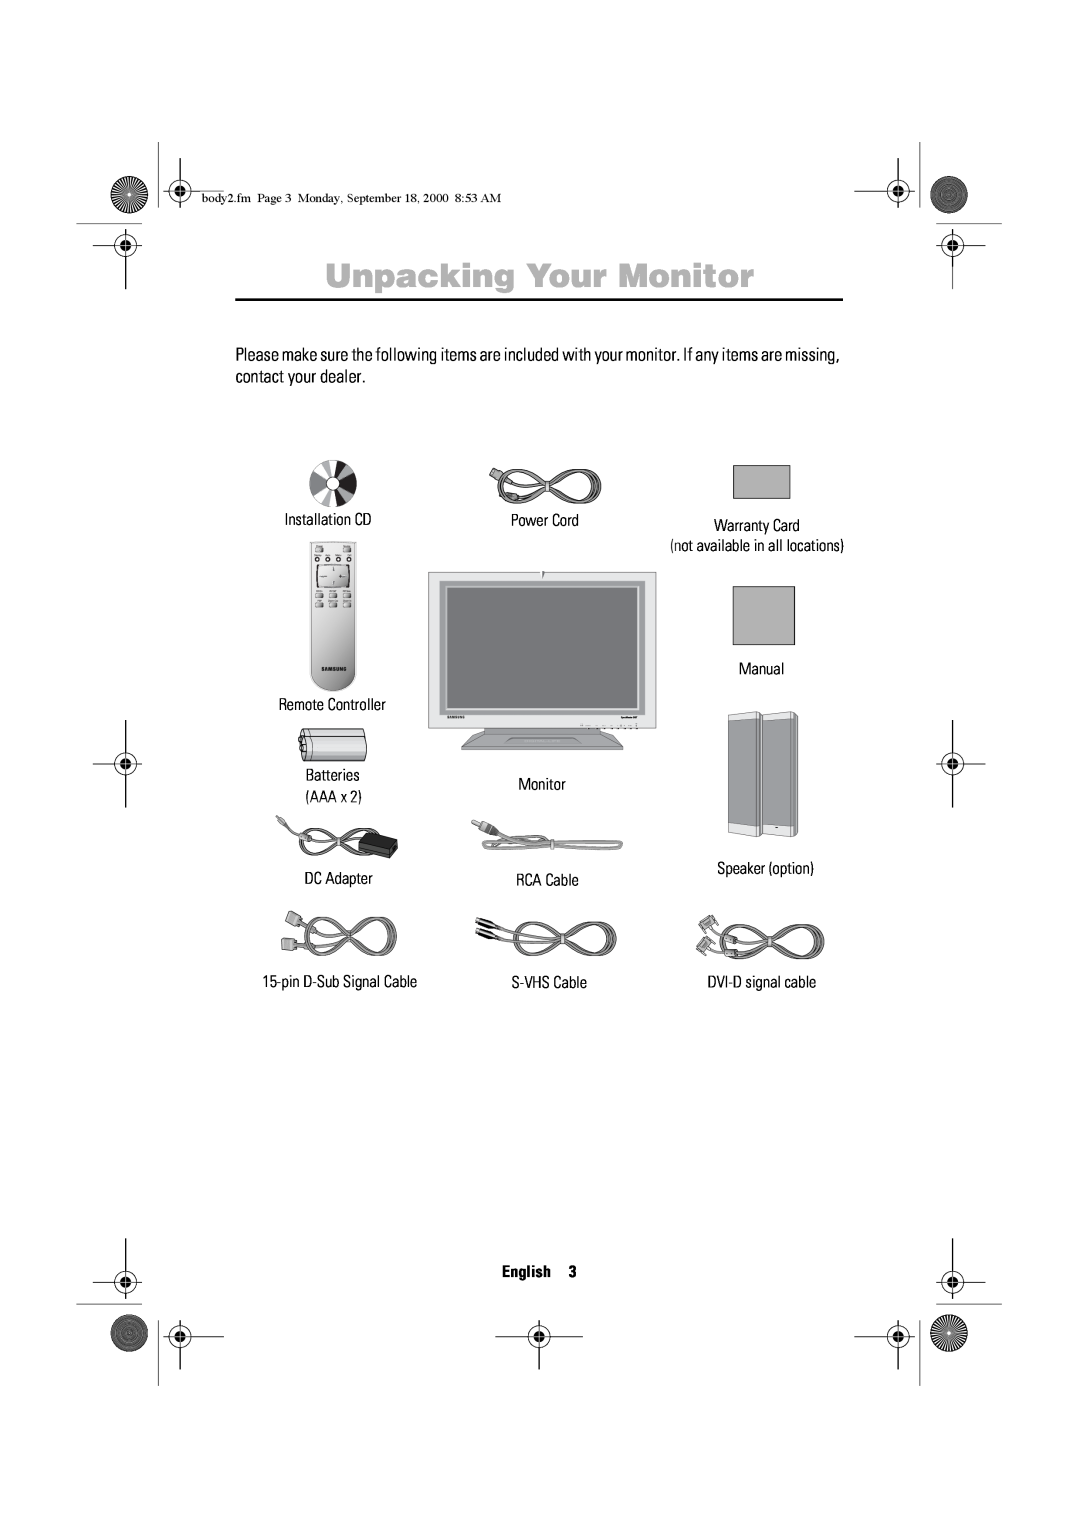 Sharp 210T Unpacking Your Monitor, Deutsch Français, Portuguese Italiano Español, English, Power Cord, Manual Monitor 